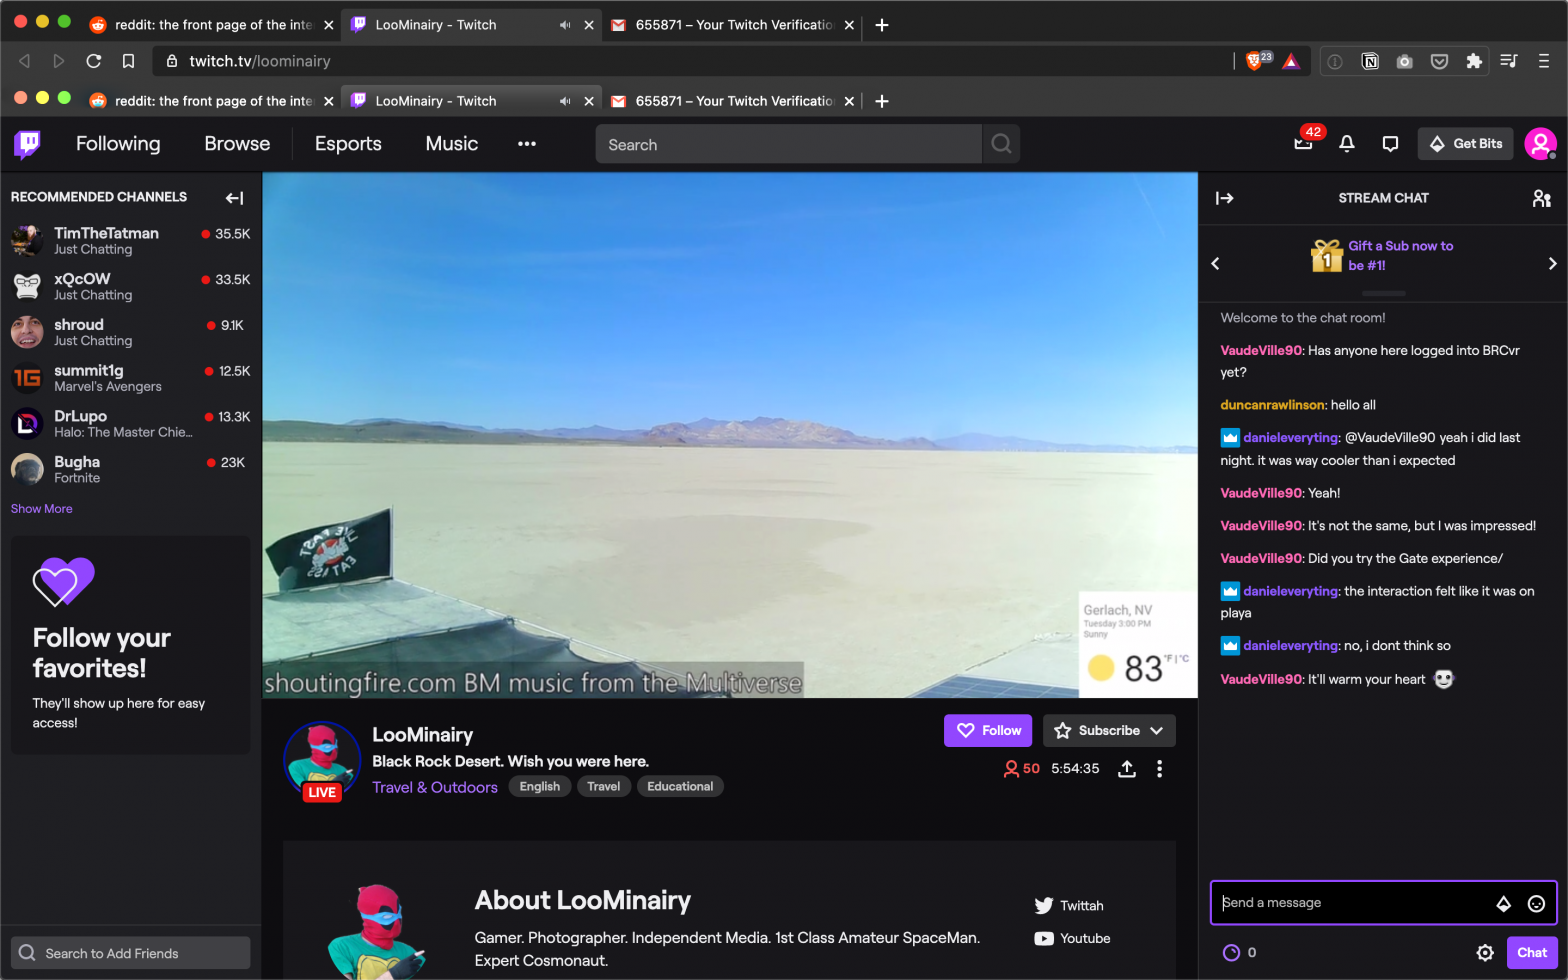 Loominairy's Live Stream from Playa